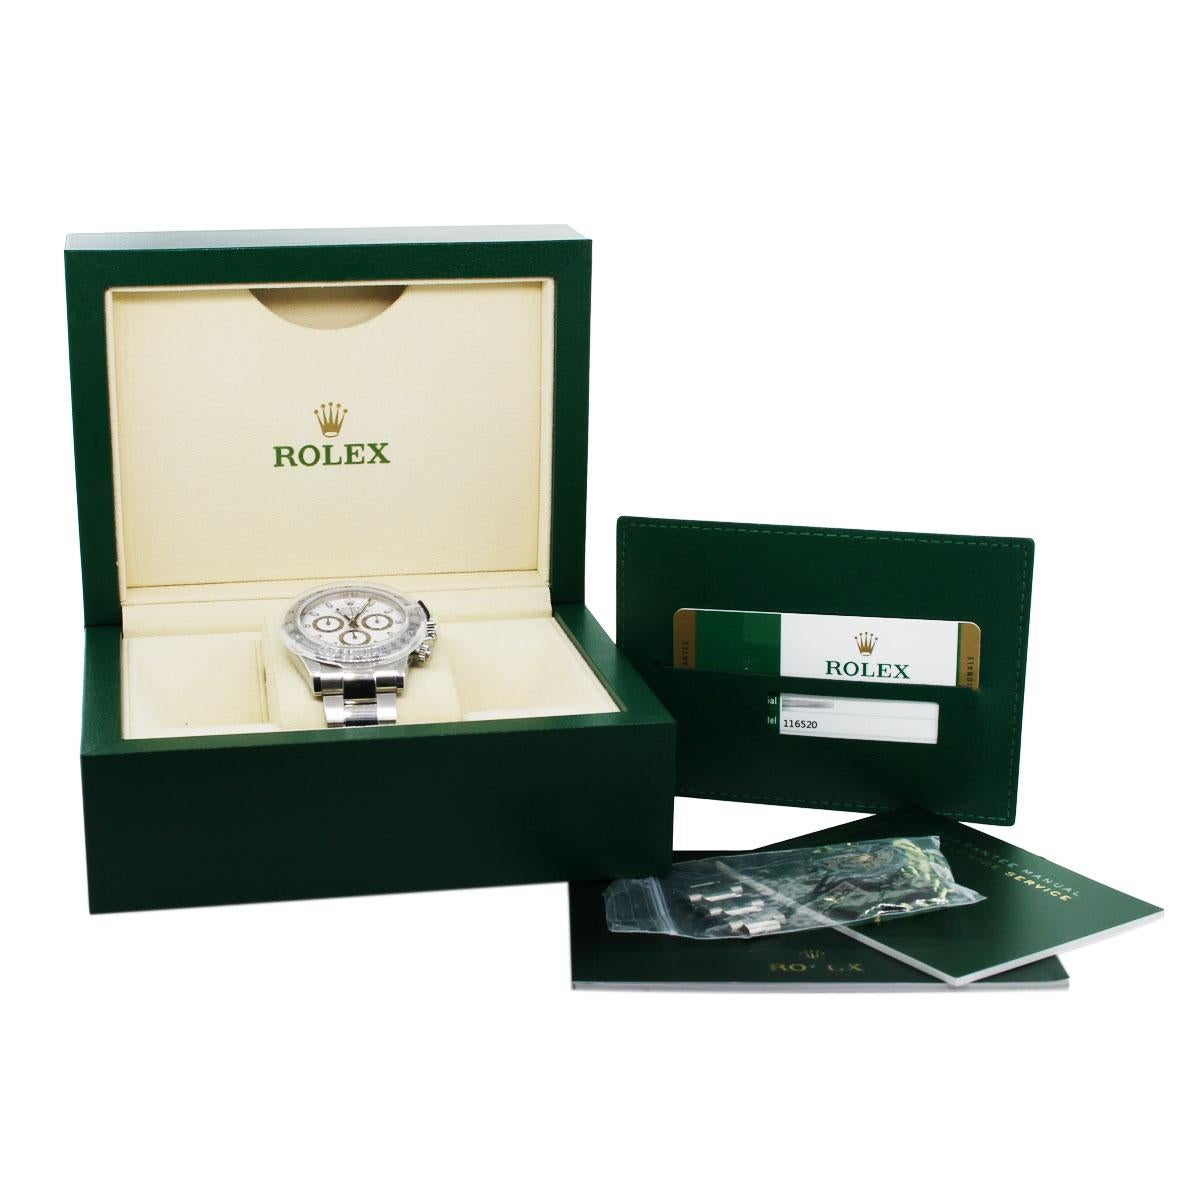 Rolex 116520 Daytona White Chronograph Dial Wrist Watch 1